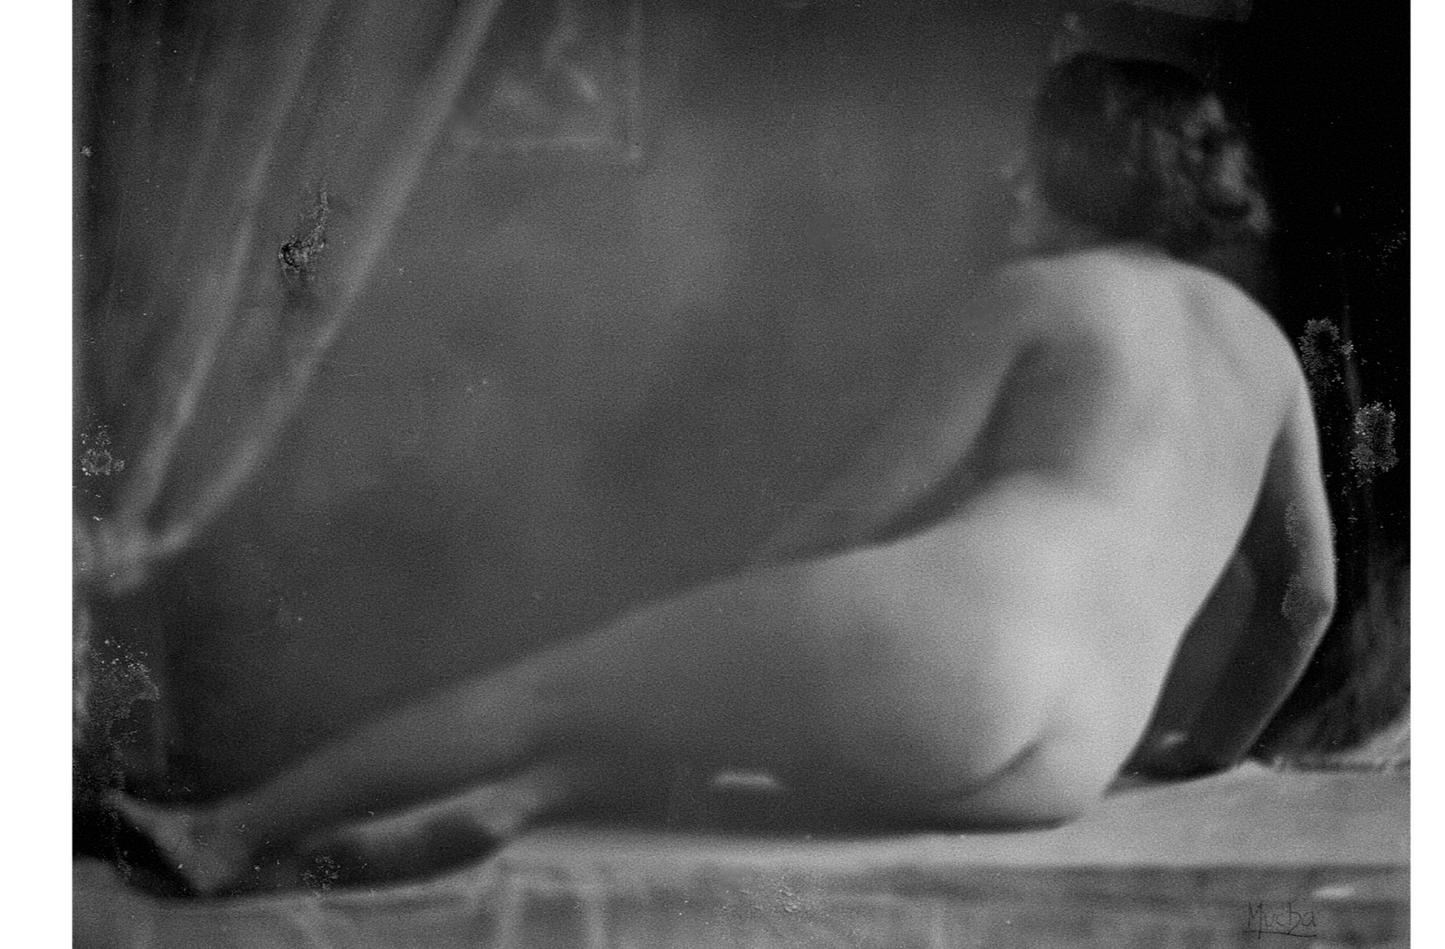 Femme nue allongée par Alphonse Maria Mucha vers 1910 - Carte postale